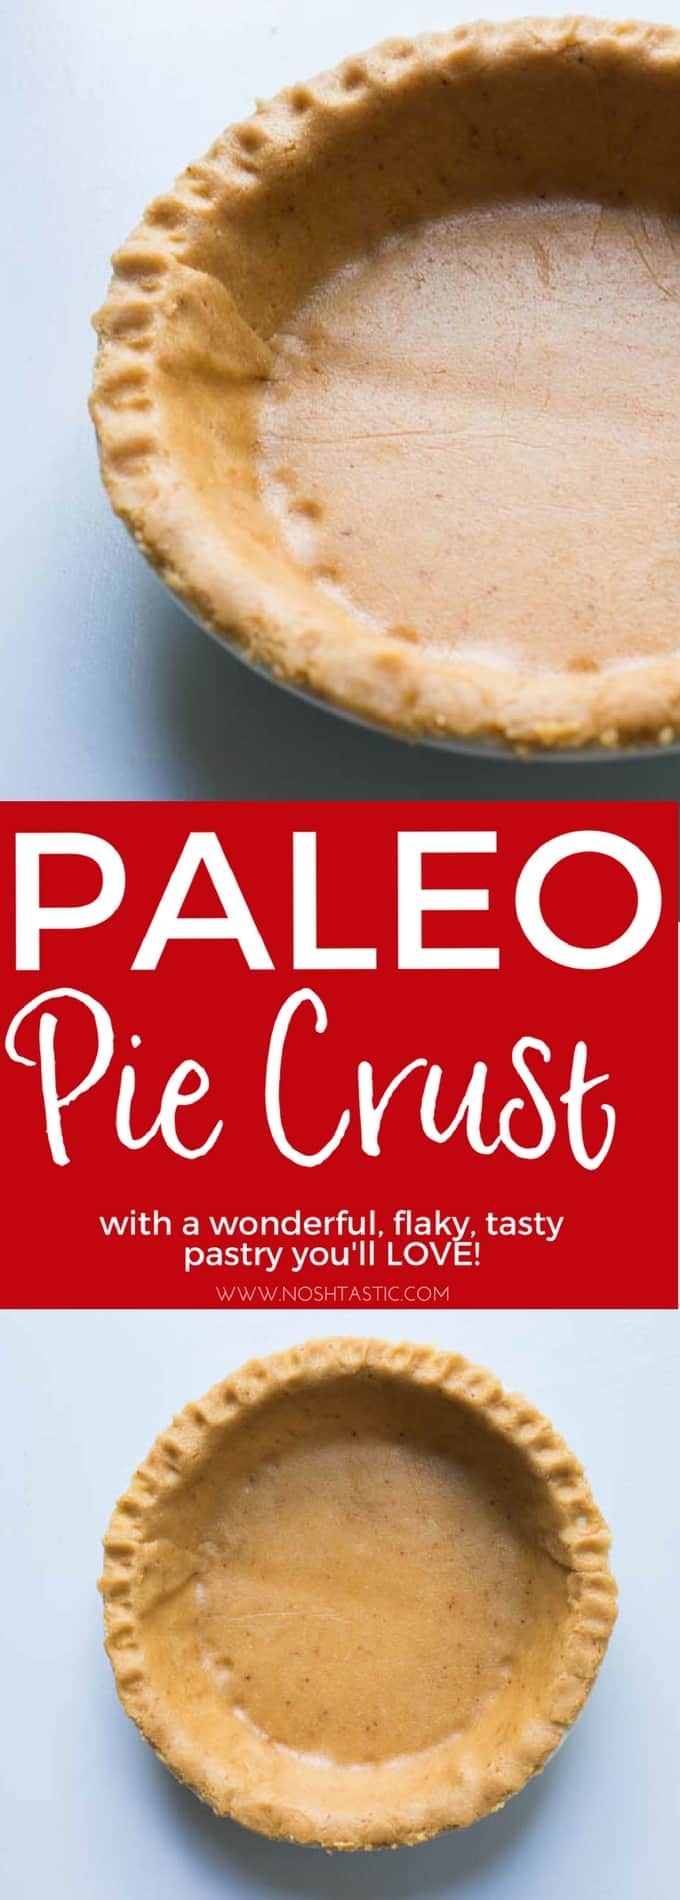 It's very easy to make my Paleo Pie Crust! it's and almond flour pie crust that's perfect for sweet pies or savory pies or quiches if you omit the sugar. #paleo #paleopie #paleodessert #paleobaking #almondflourpiecrust #glutenfree #glutenfreebaking #glutenfreepiecrust